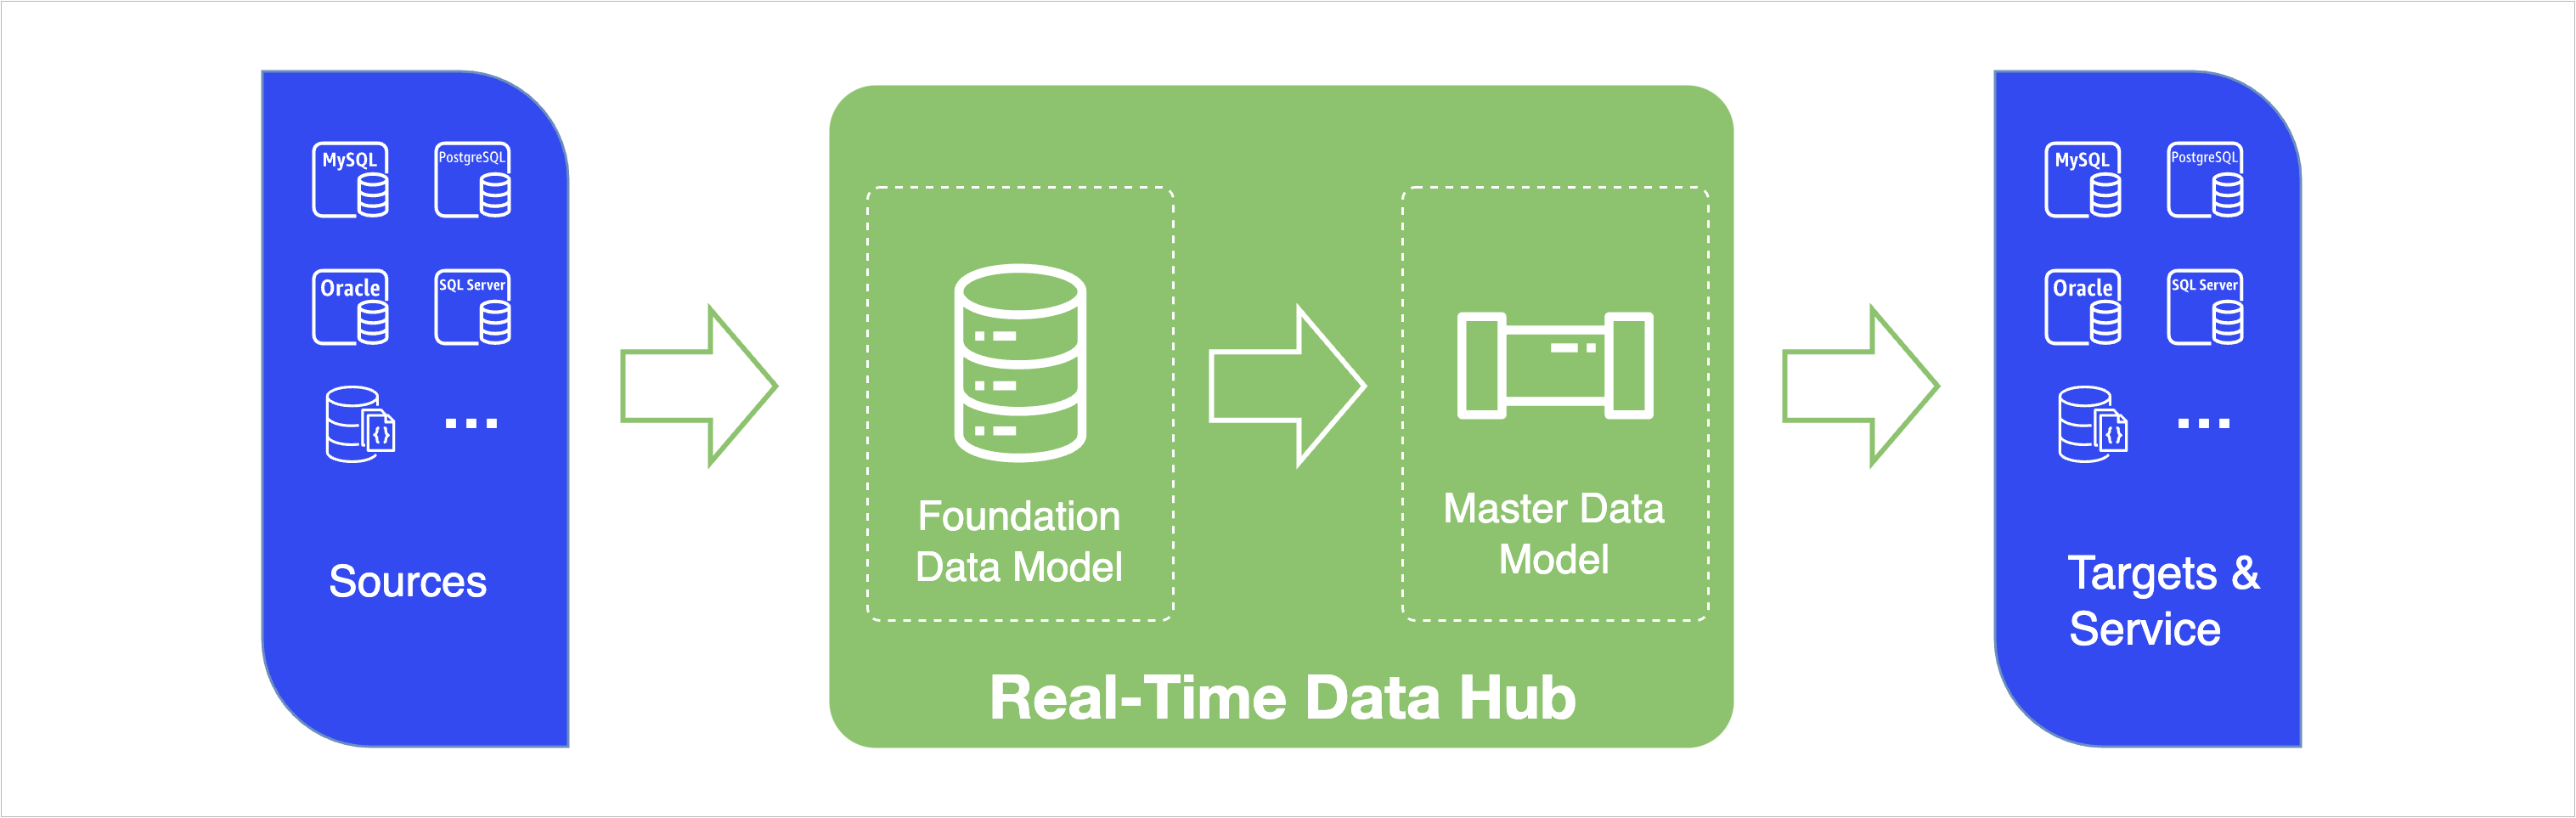 Data Service Platform Architecture